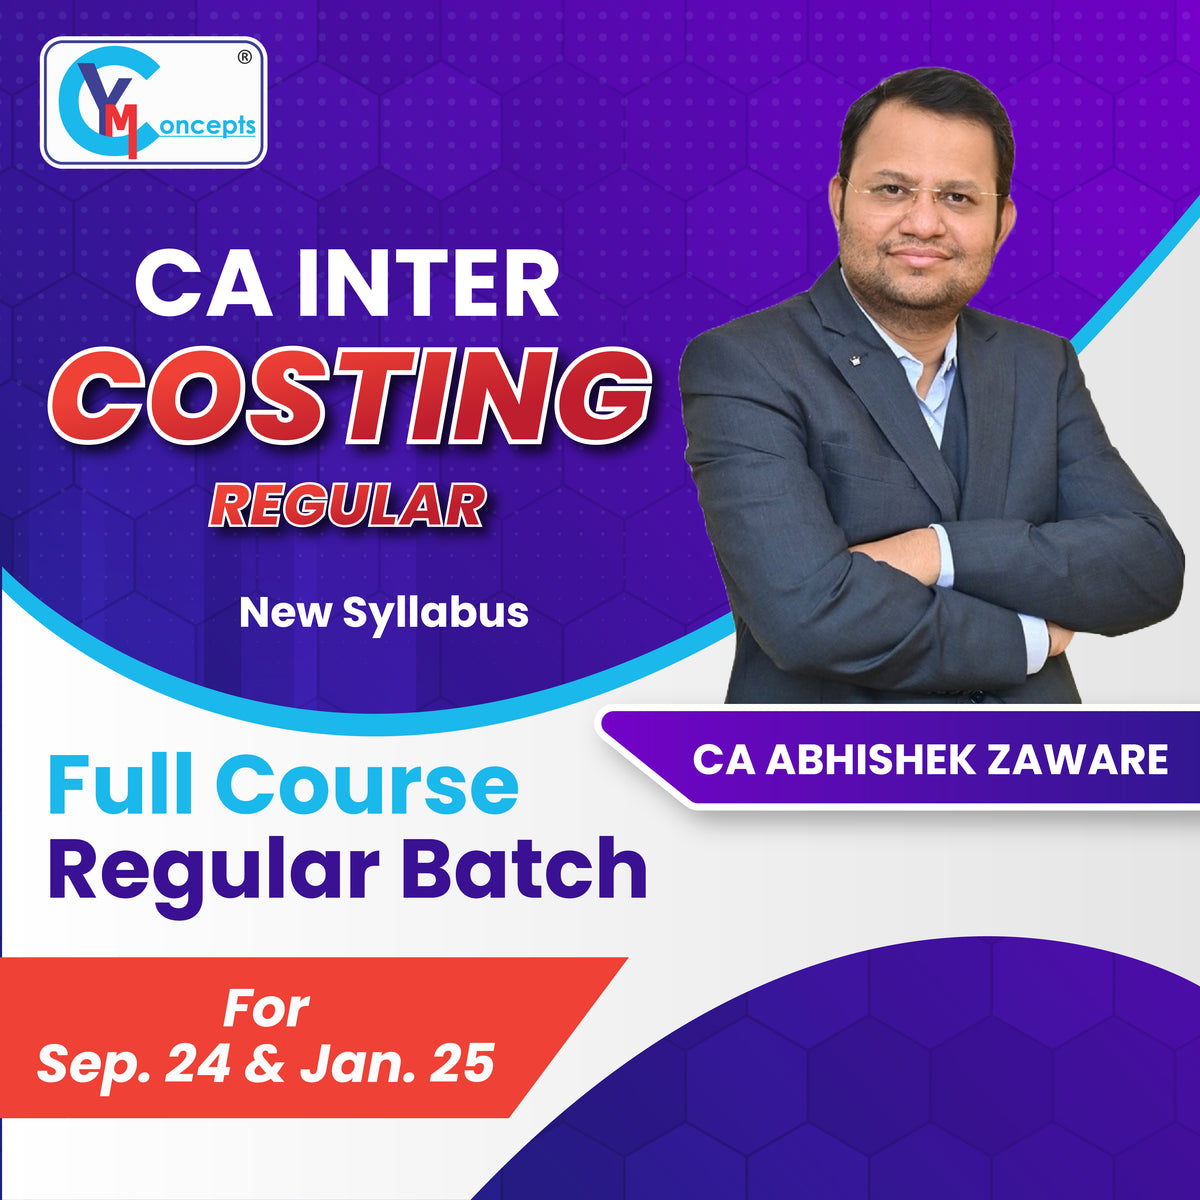 CA INTER - COSTING REGULAR NEW SYLLABUS BY - CA. ABHISHEK ZAWARE - Sep. 24 / Jan. 25